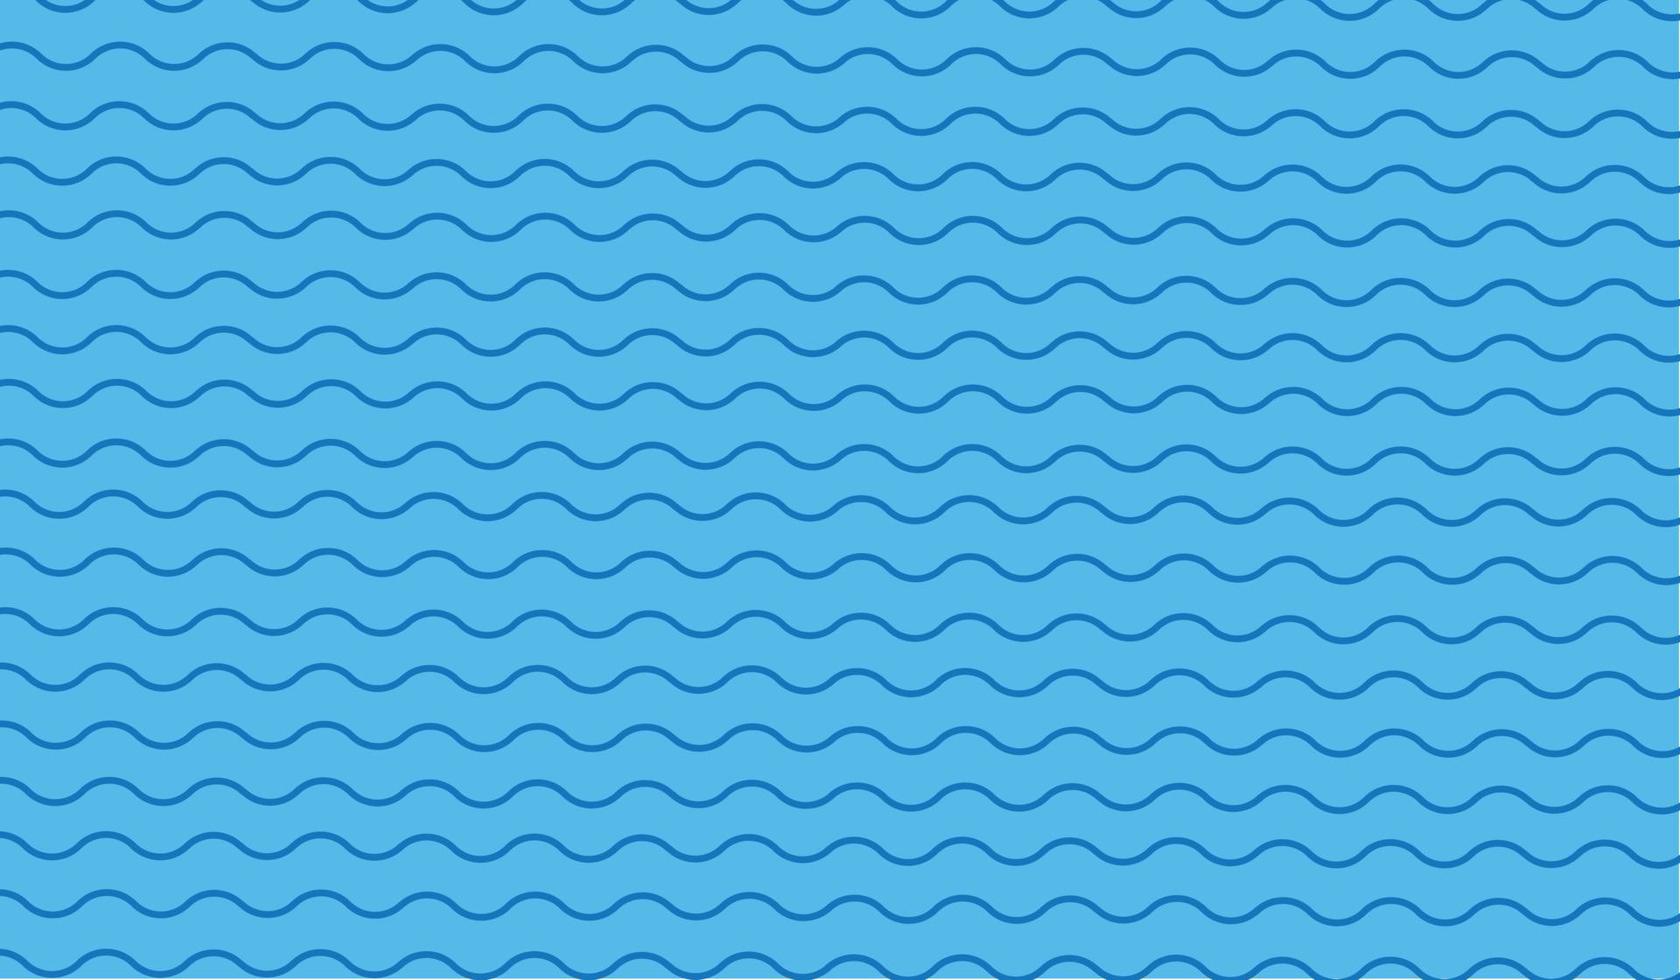 Blue water wave line pattern background. Vector illustration.